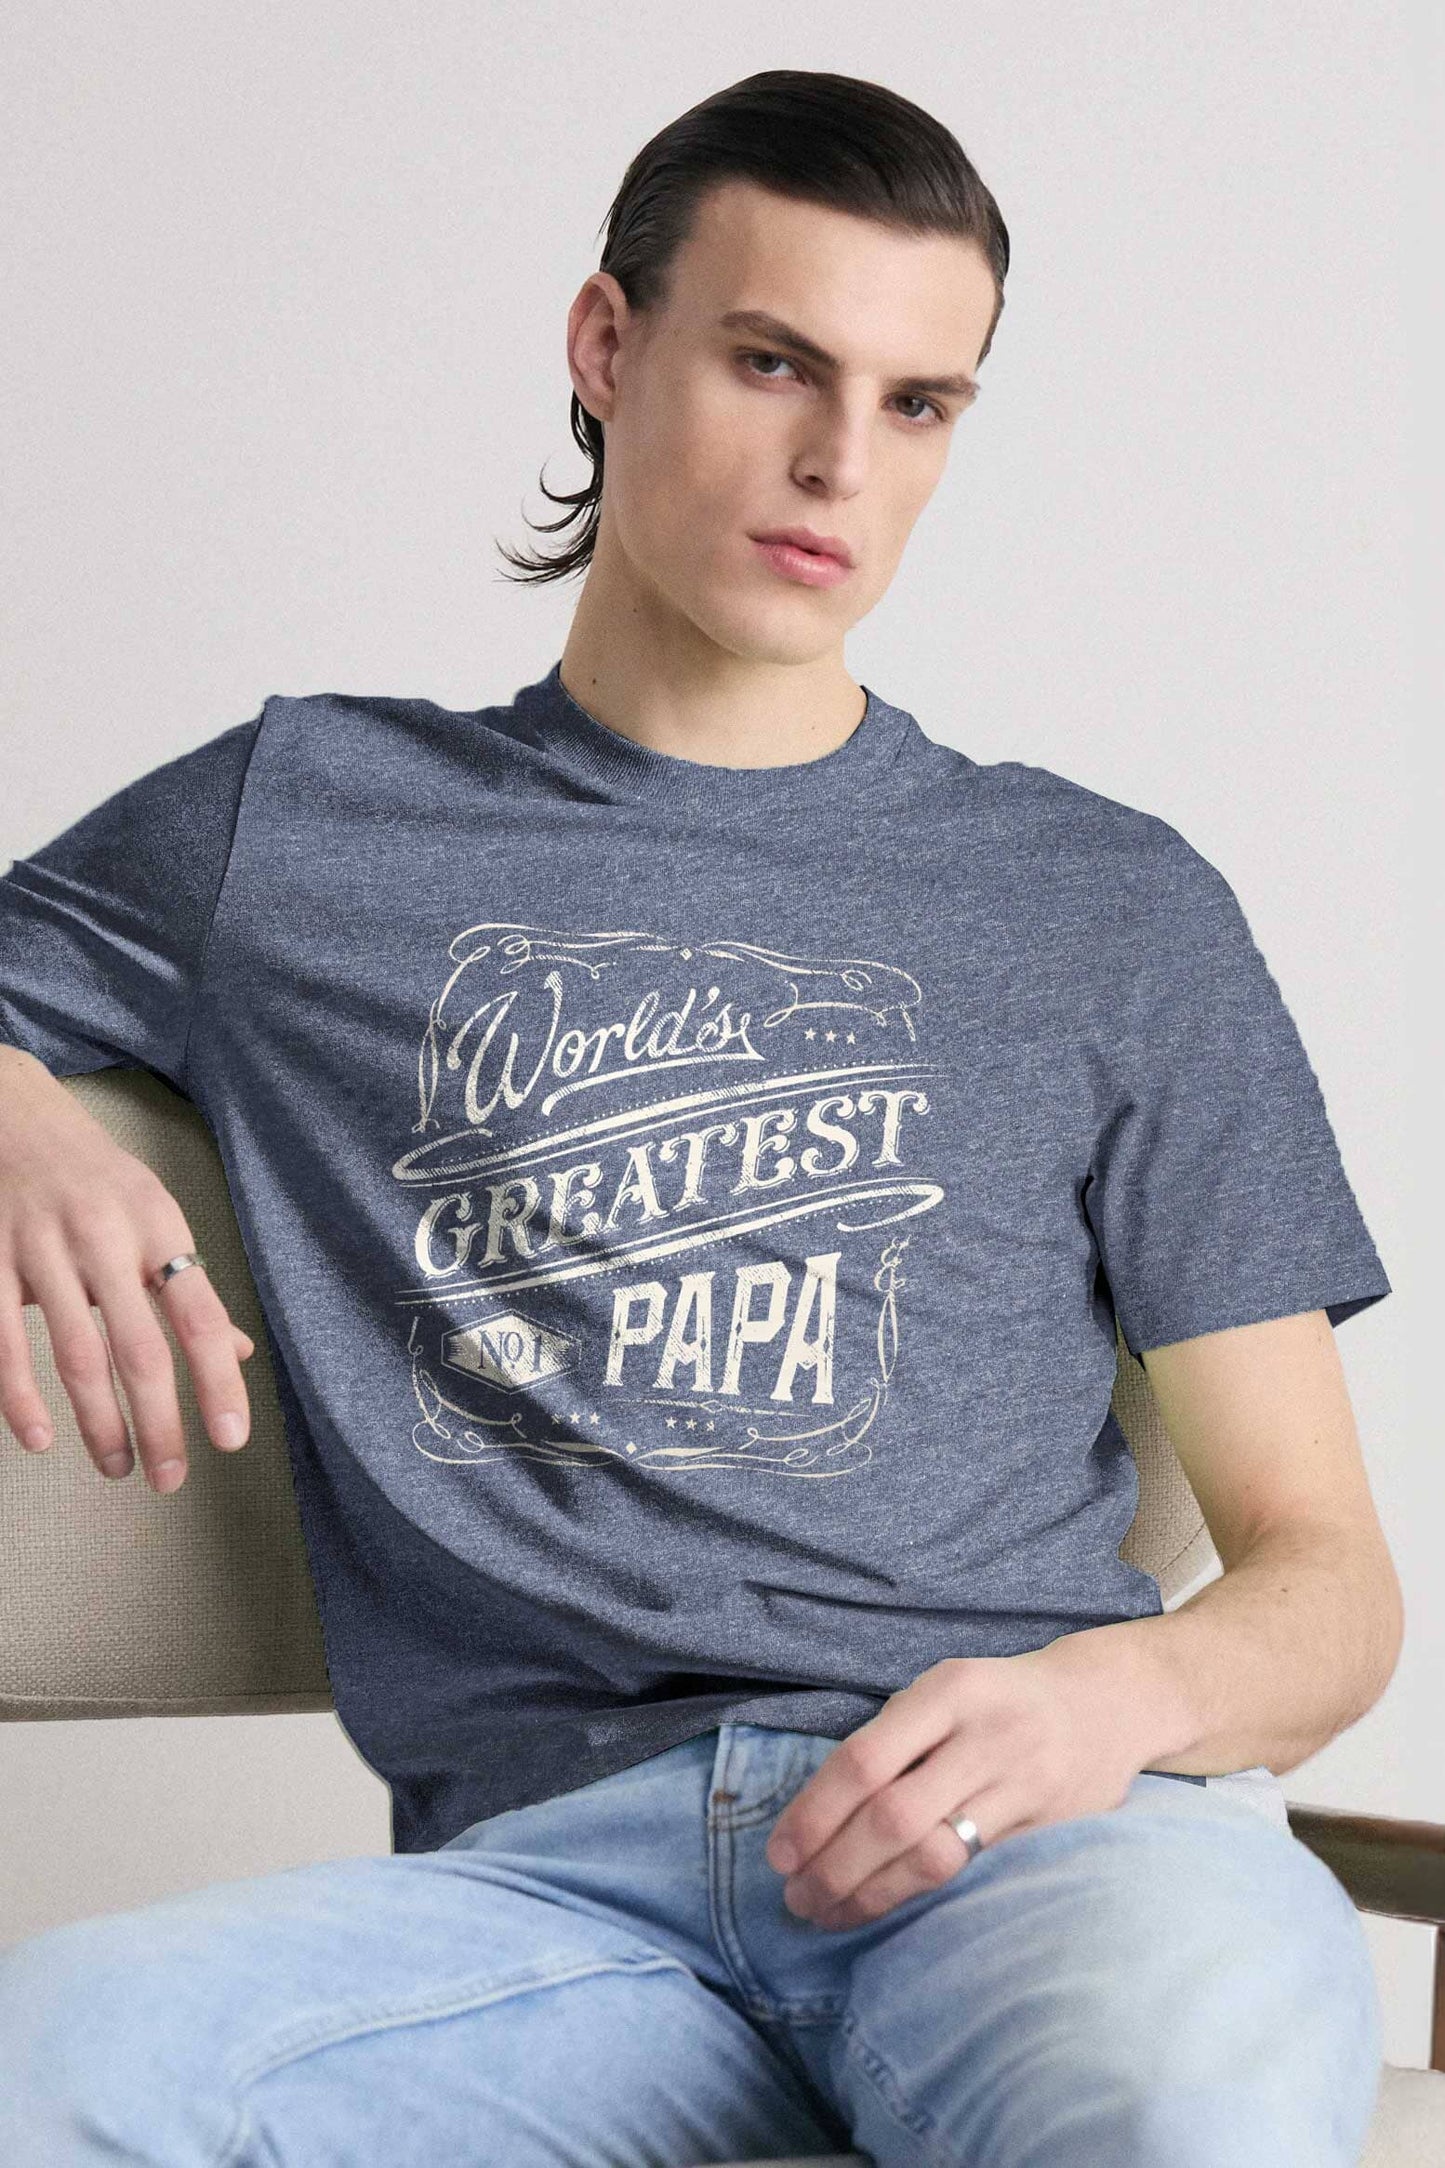 Celebrate Men's World Greatest Papa Printed Style Tee Shirt Men's Tee Shirt HAS Apparel 